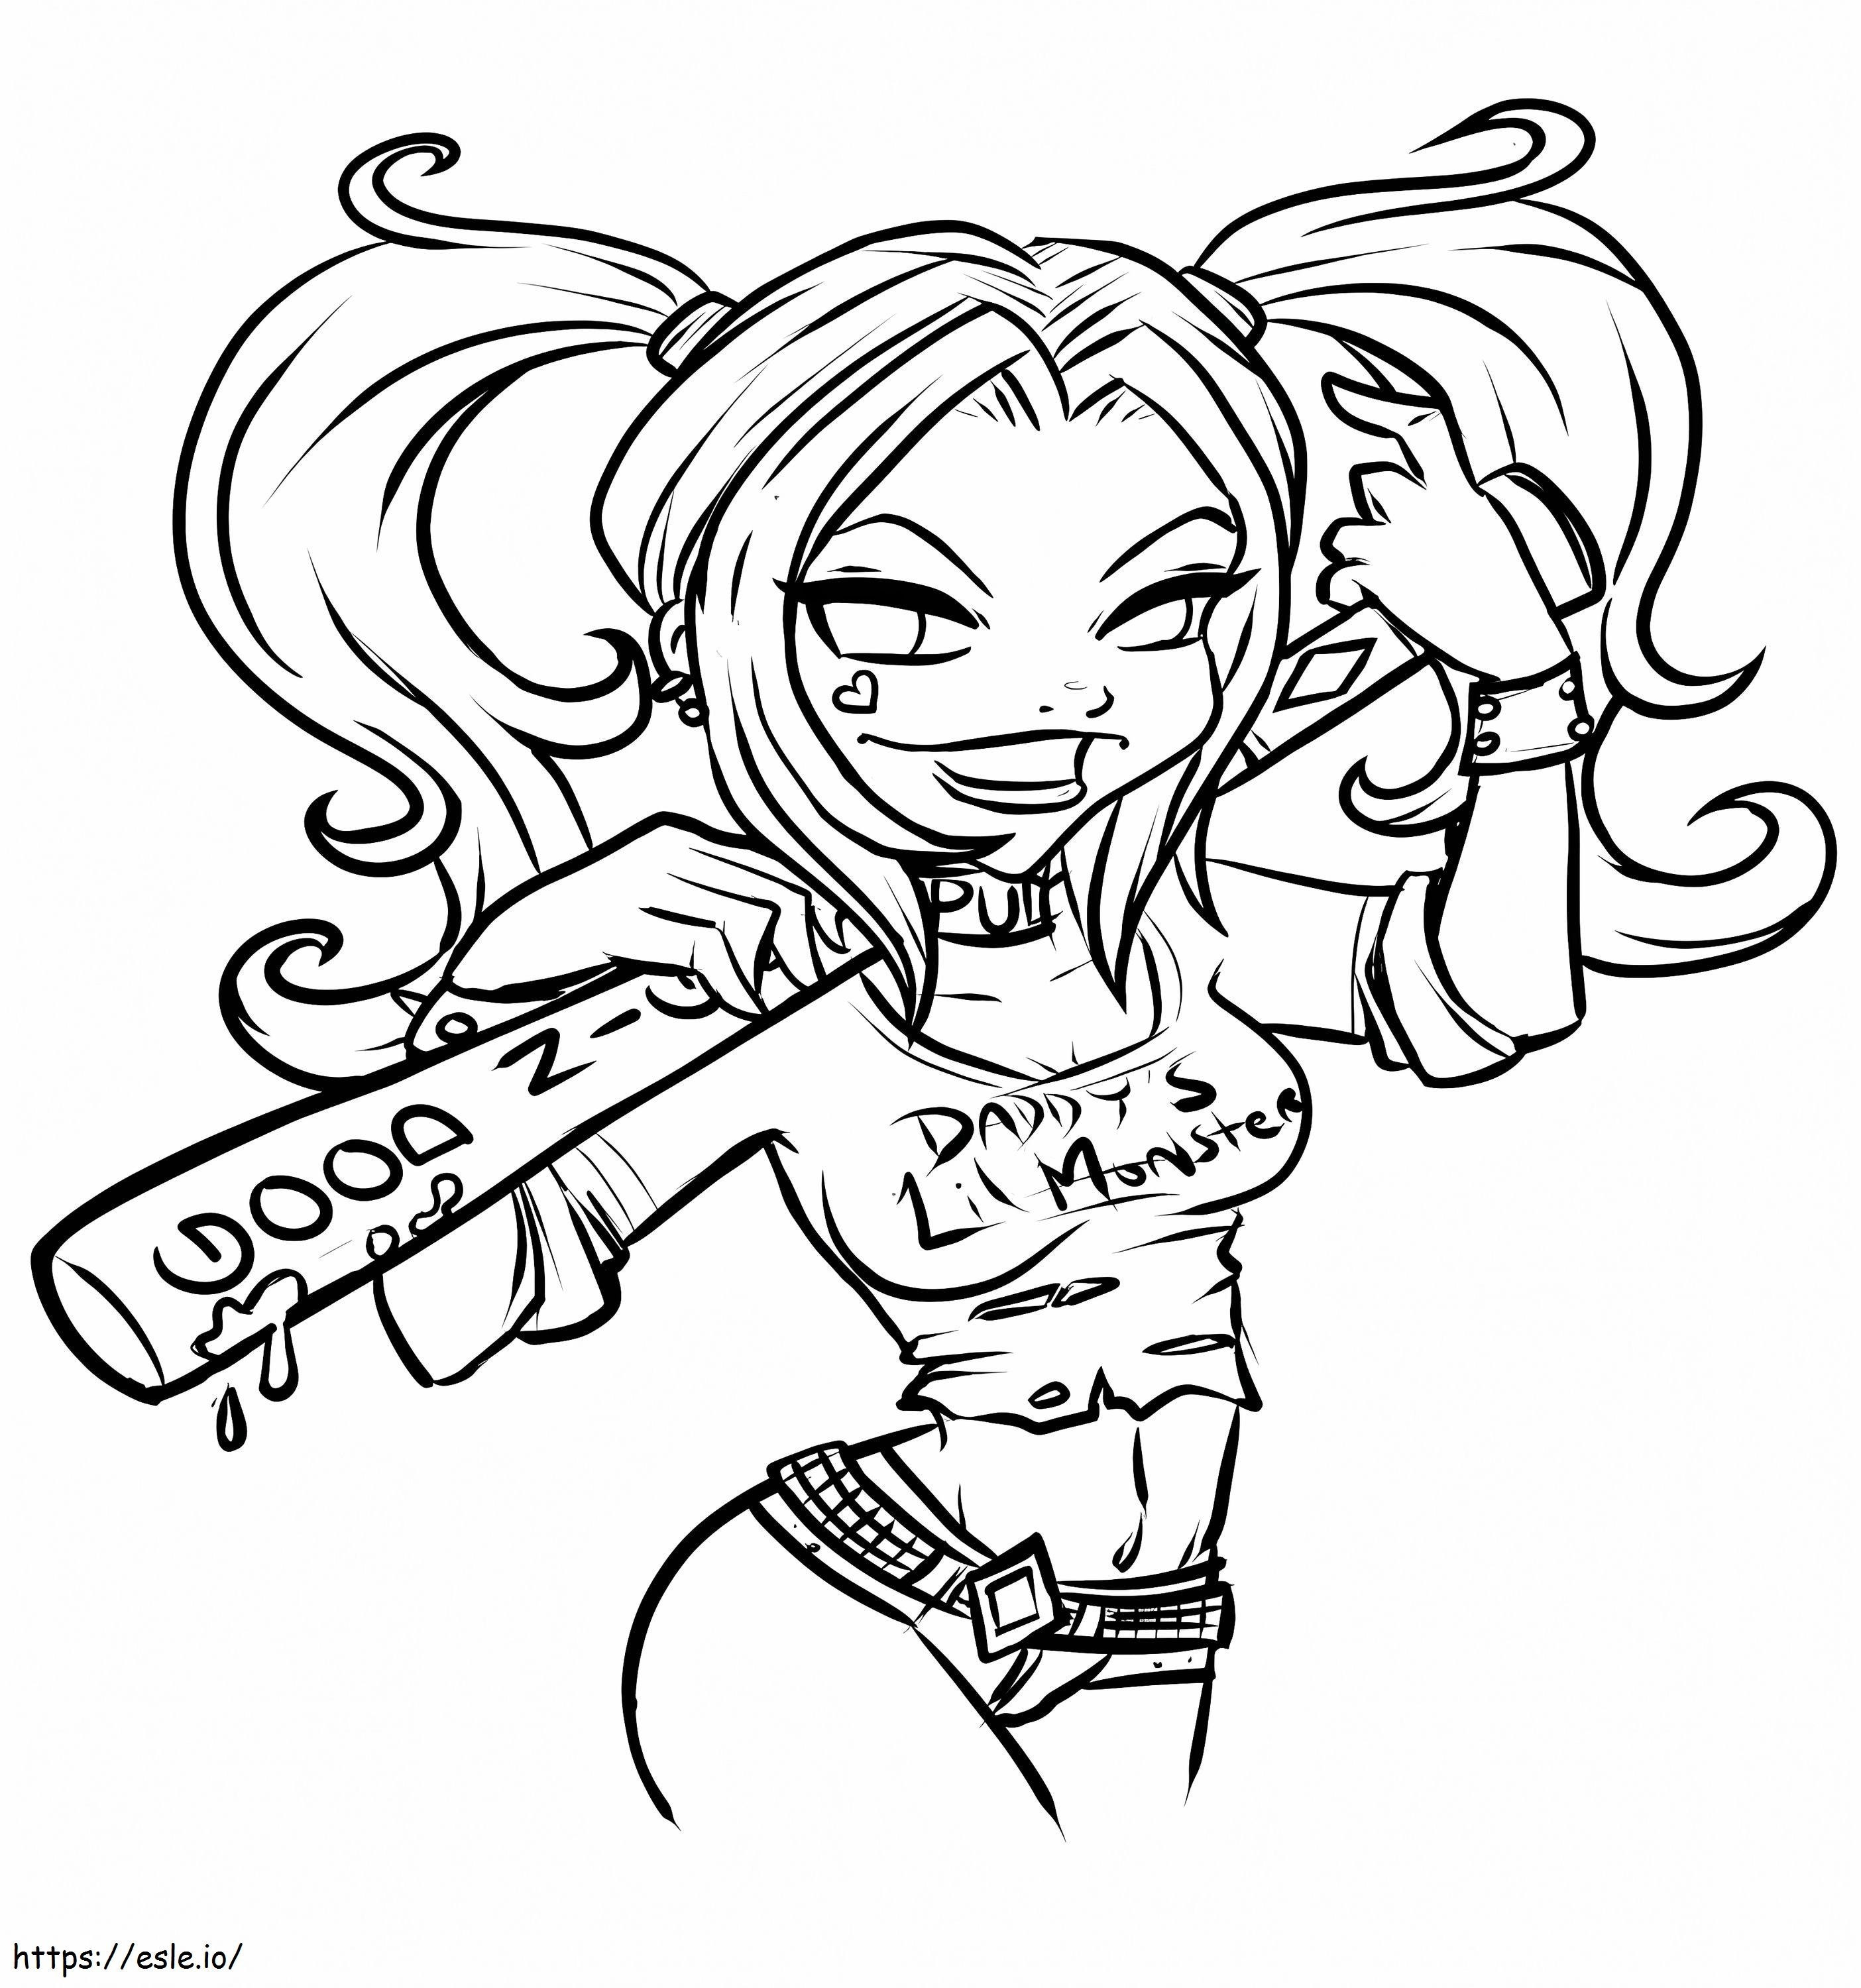 Chibi Harley Quinn coloring page